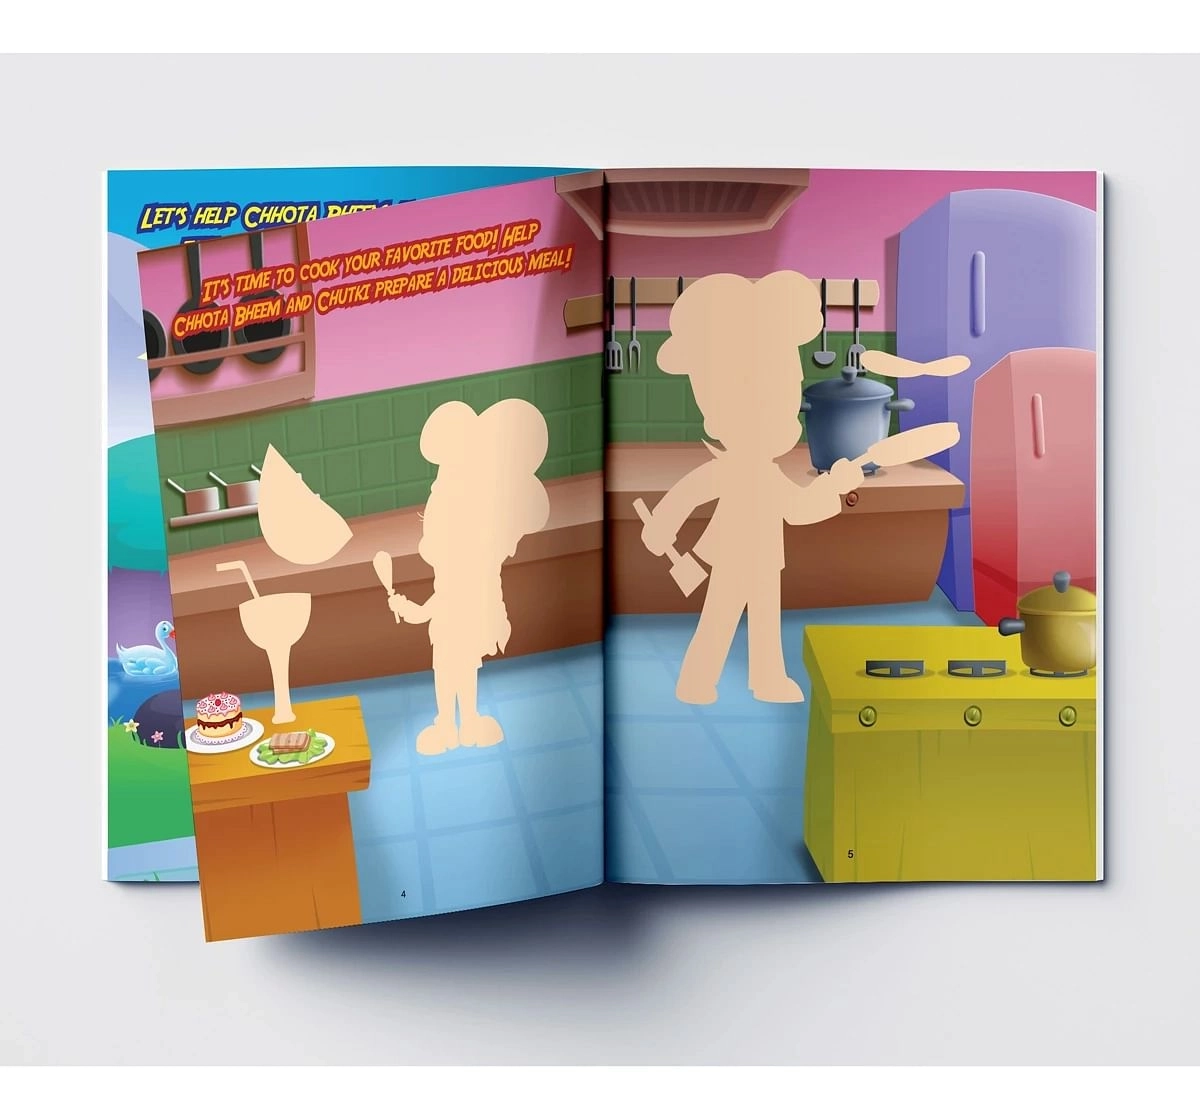 Wonder House Books Chhota Bheem Love Your Profession Fun Sticker Activity Book for kids 3Y+, Multicolour